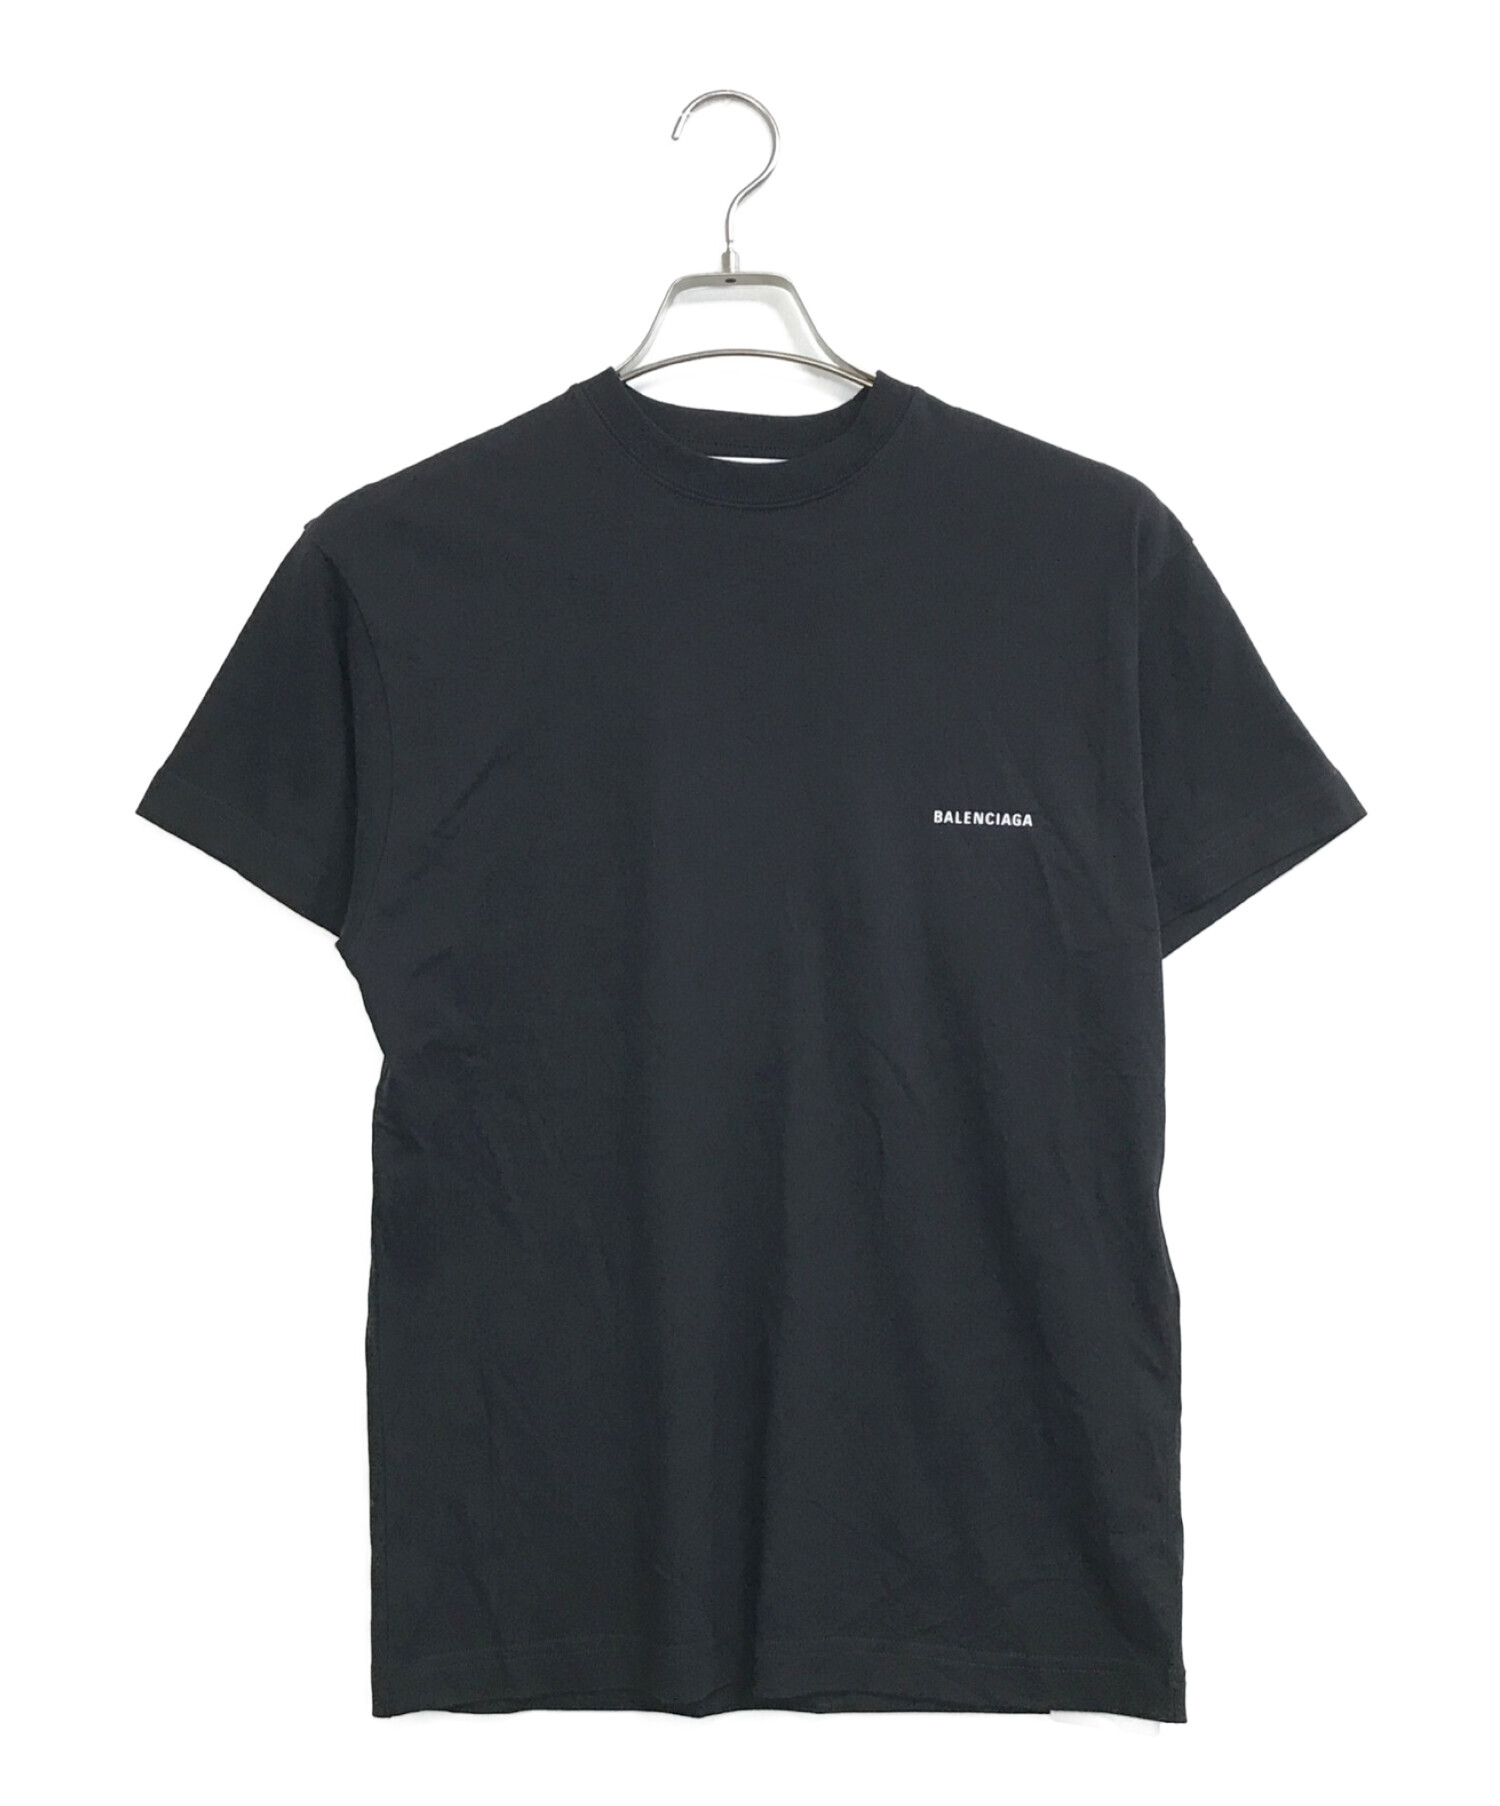 BALENCIAGA (バレンシアガ) ロゴTシャツ ブラック サイズ:XS